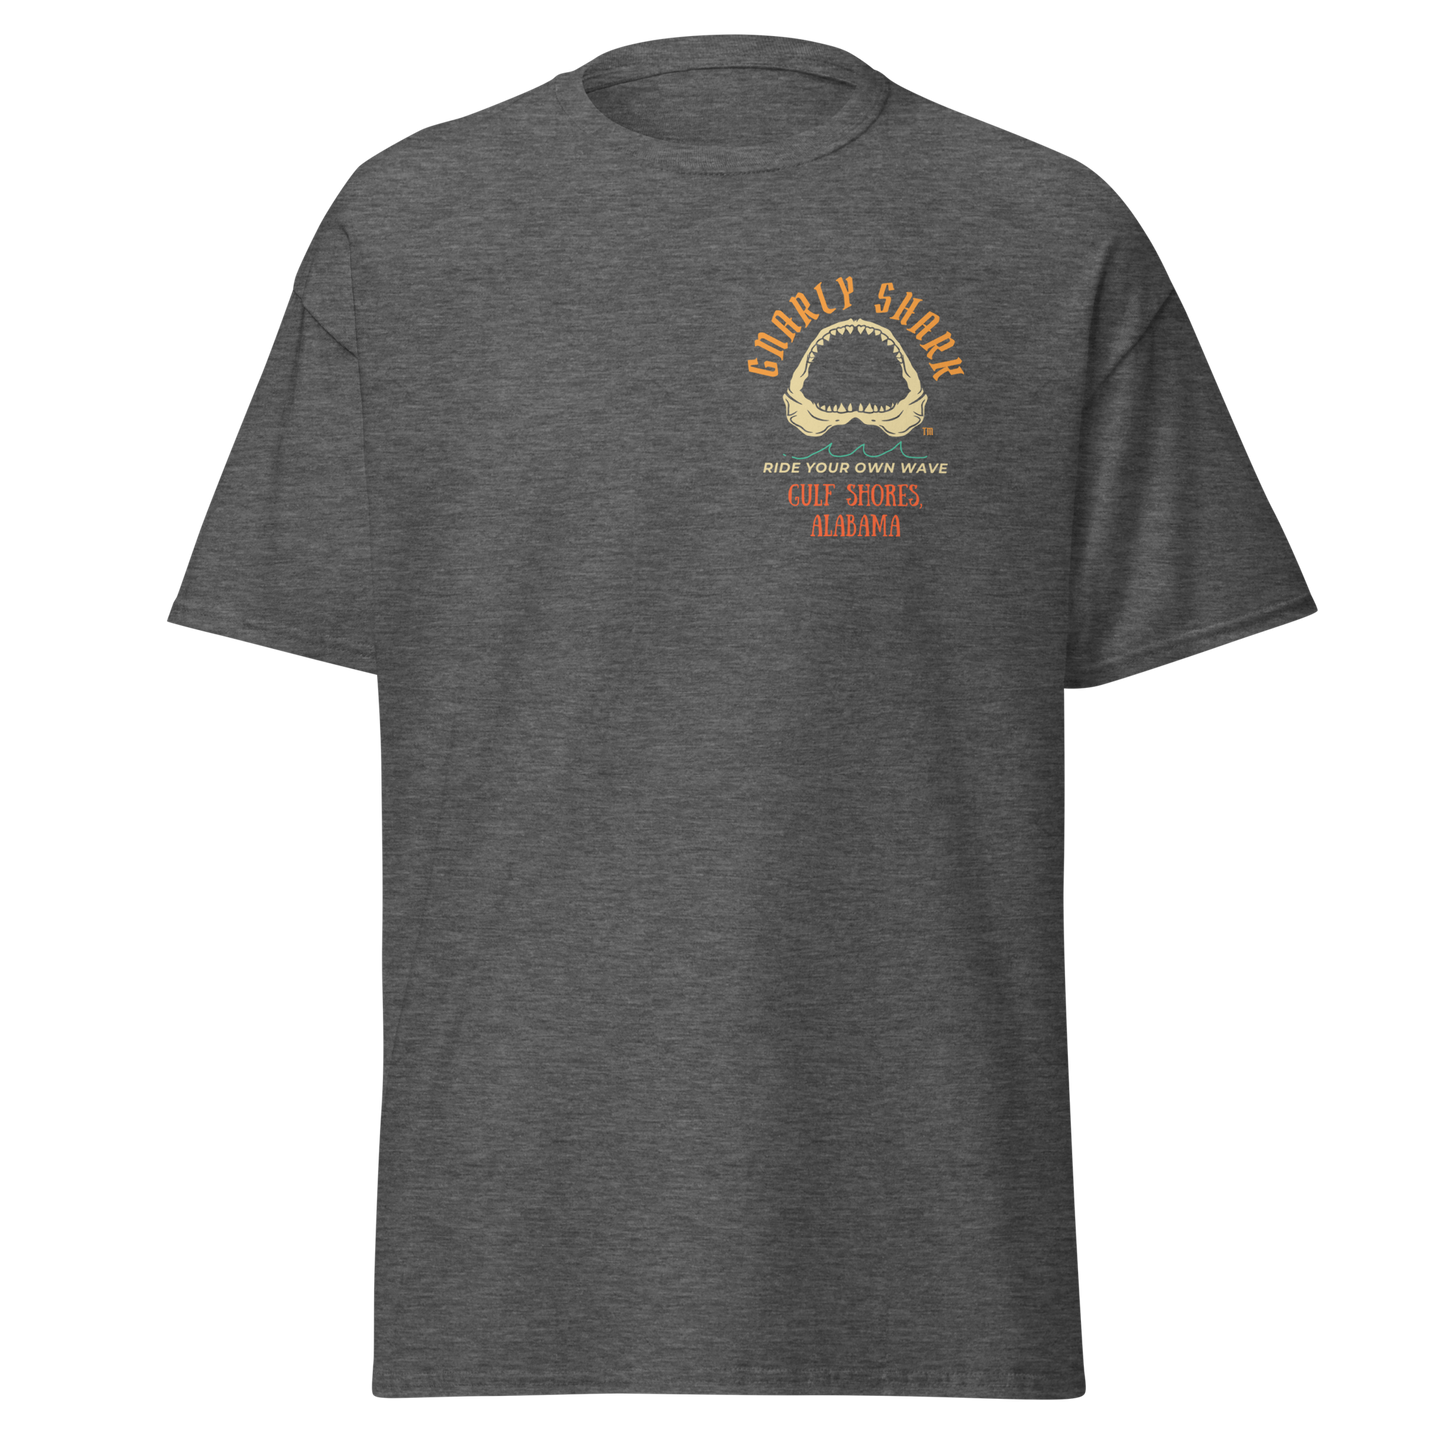 Gnarly Shark Gulf Shores Alabama T- shirt - Front / Back - Gildan classic 5000